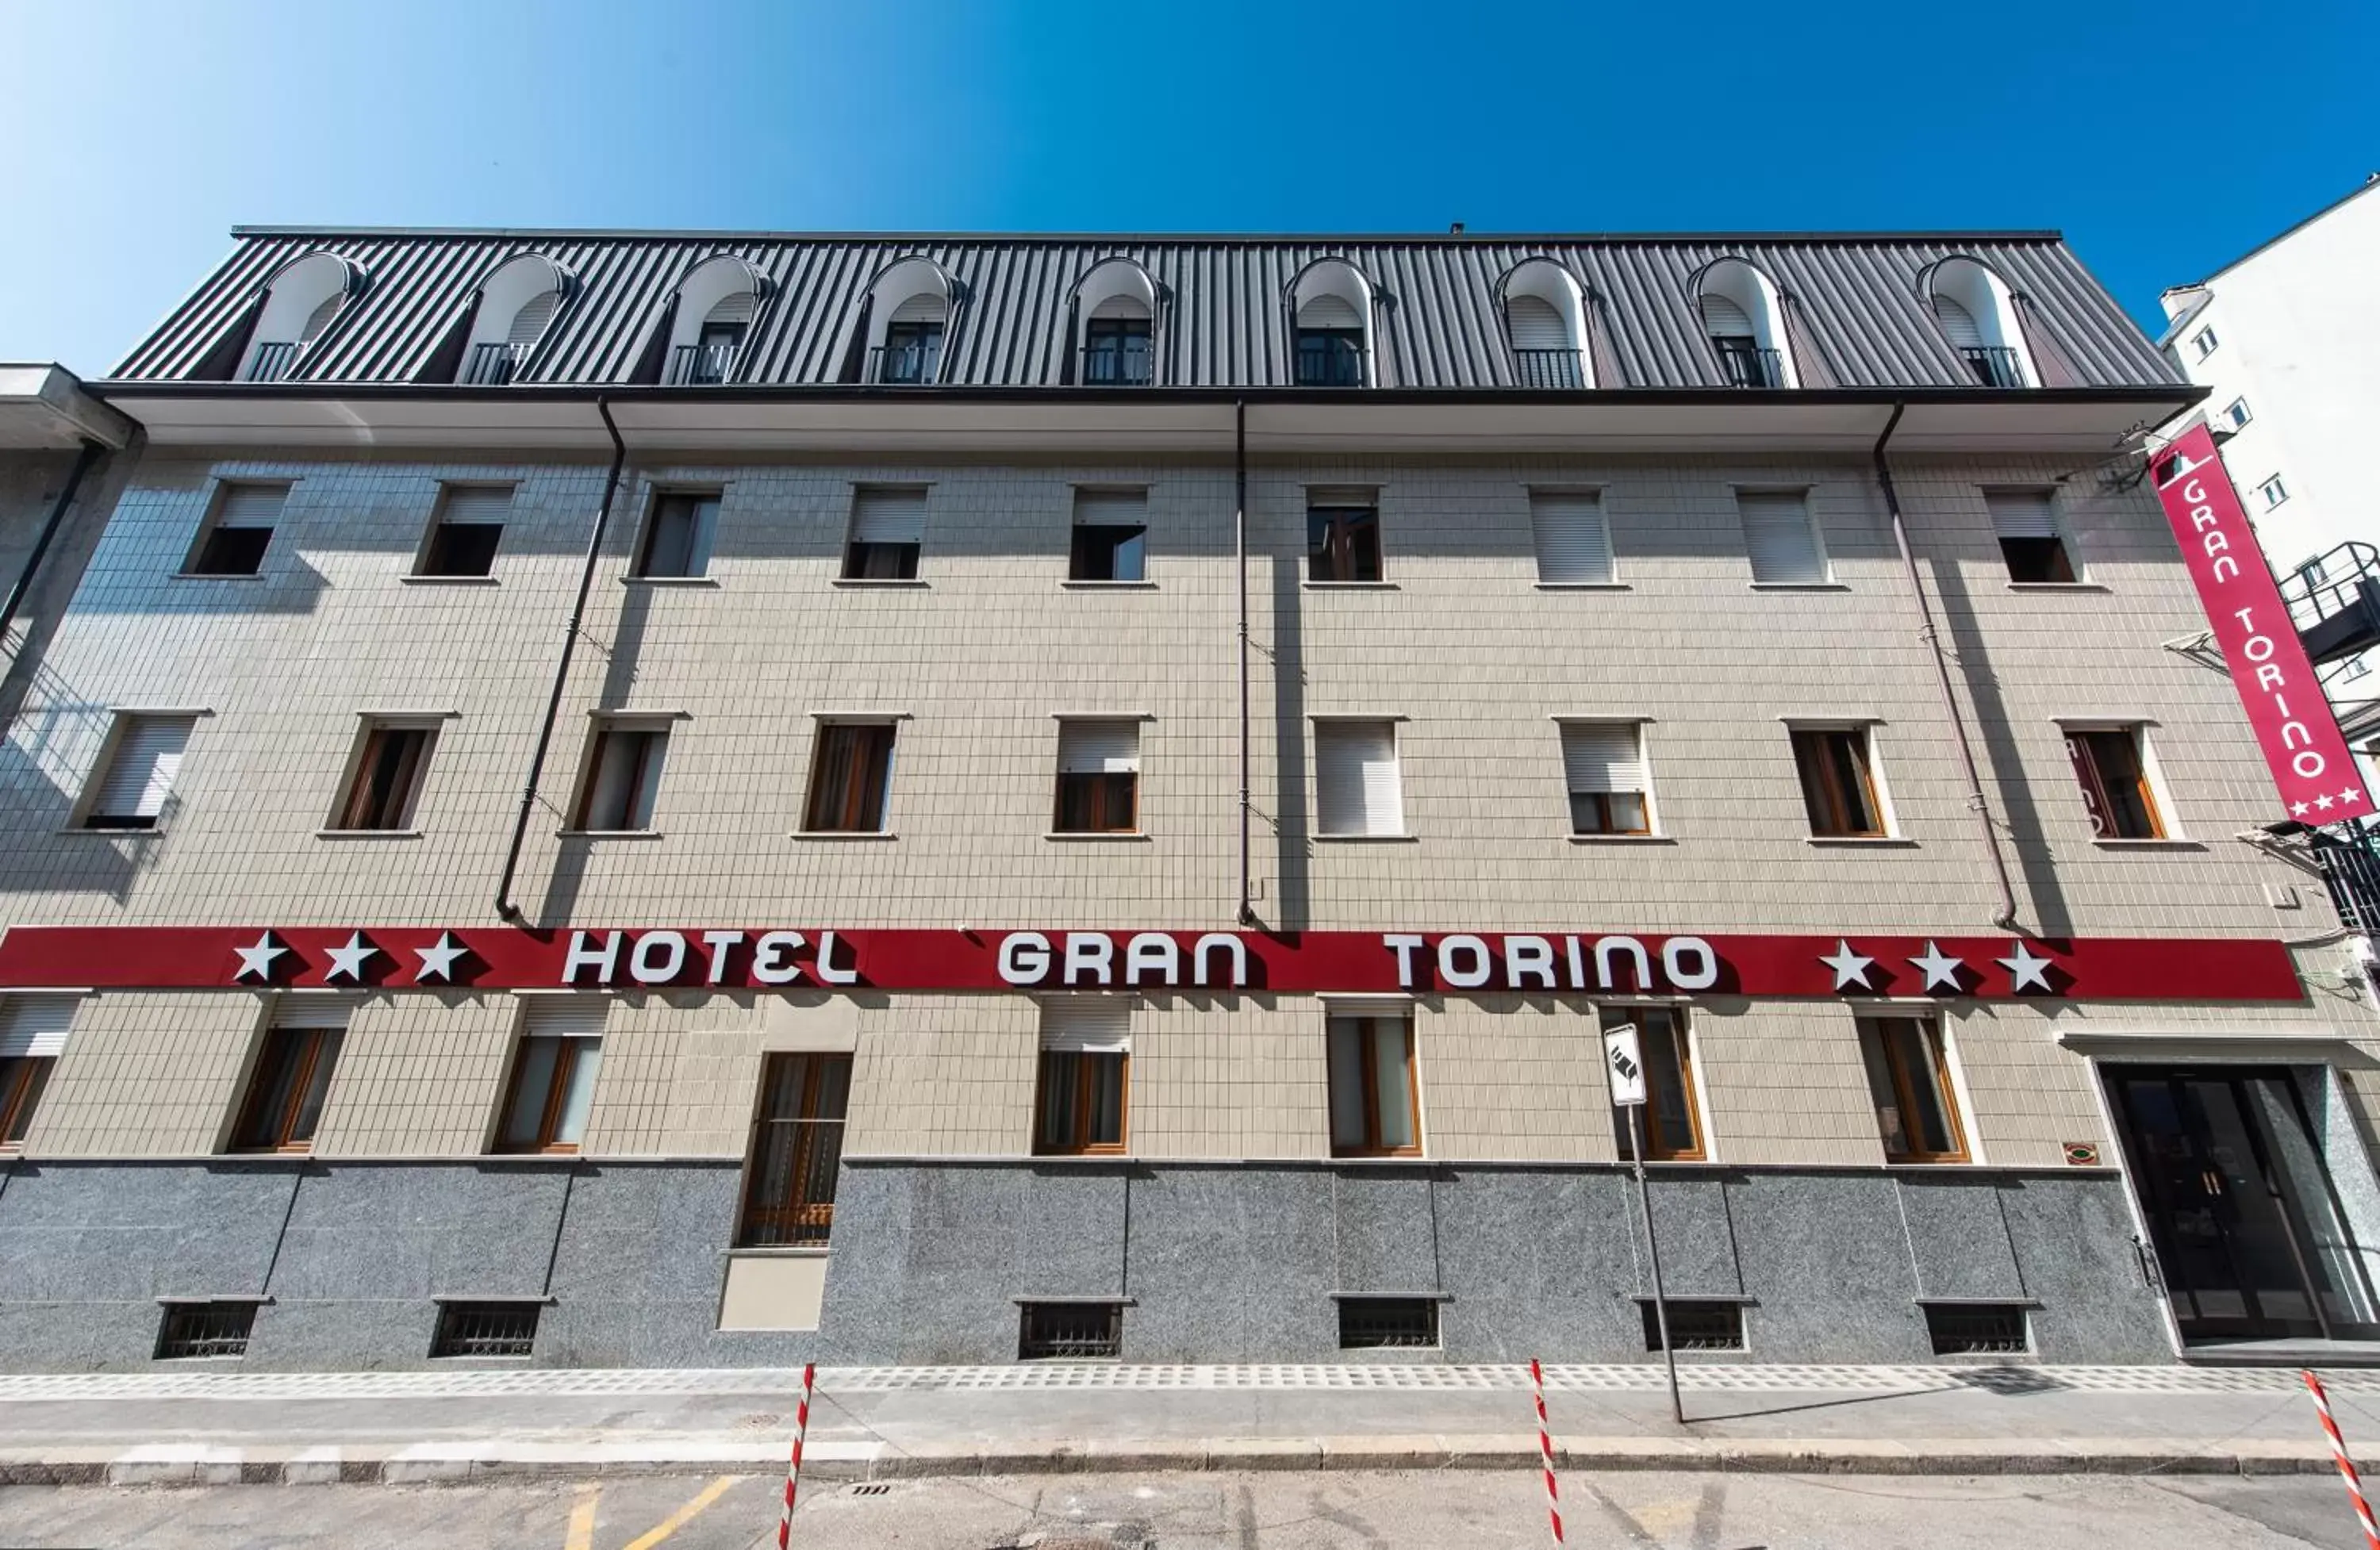 Property Building in Green Class Hotel Gran Torino